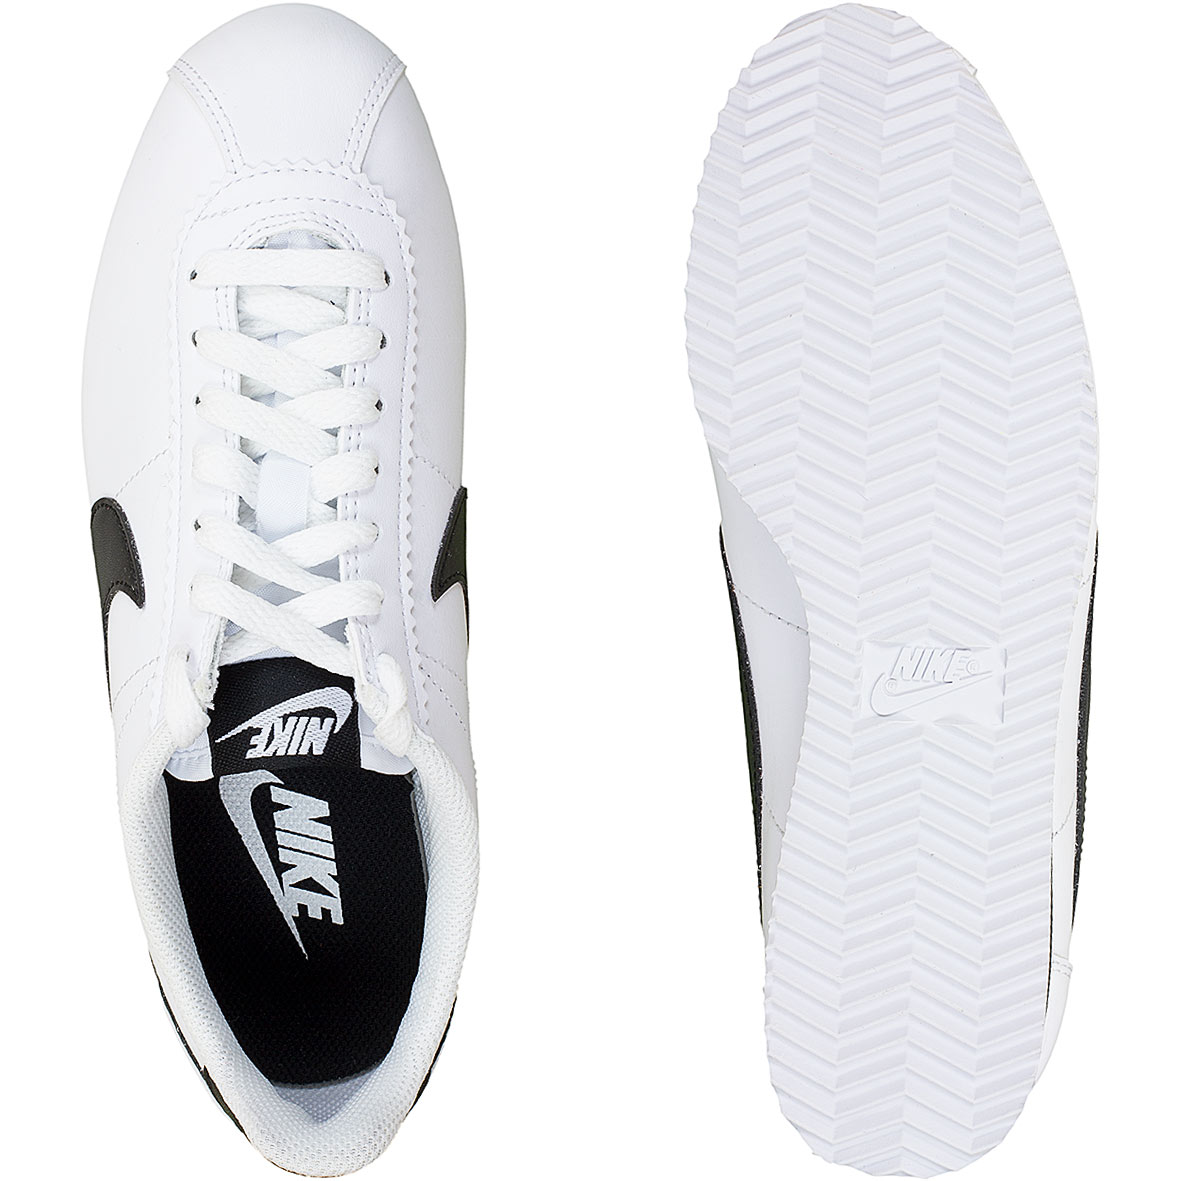 ☆ Nike Damen Sneaker Classic Cortez Leather weiß/schwarz - hier bestellen!